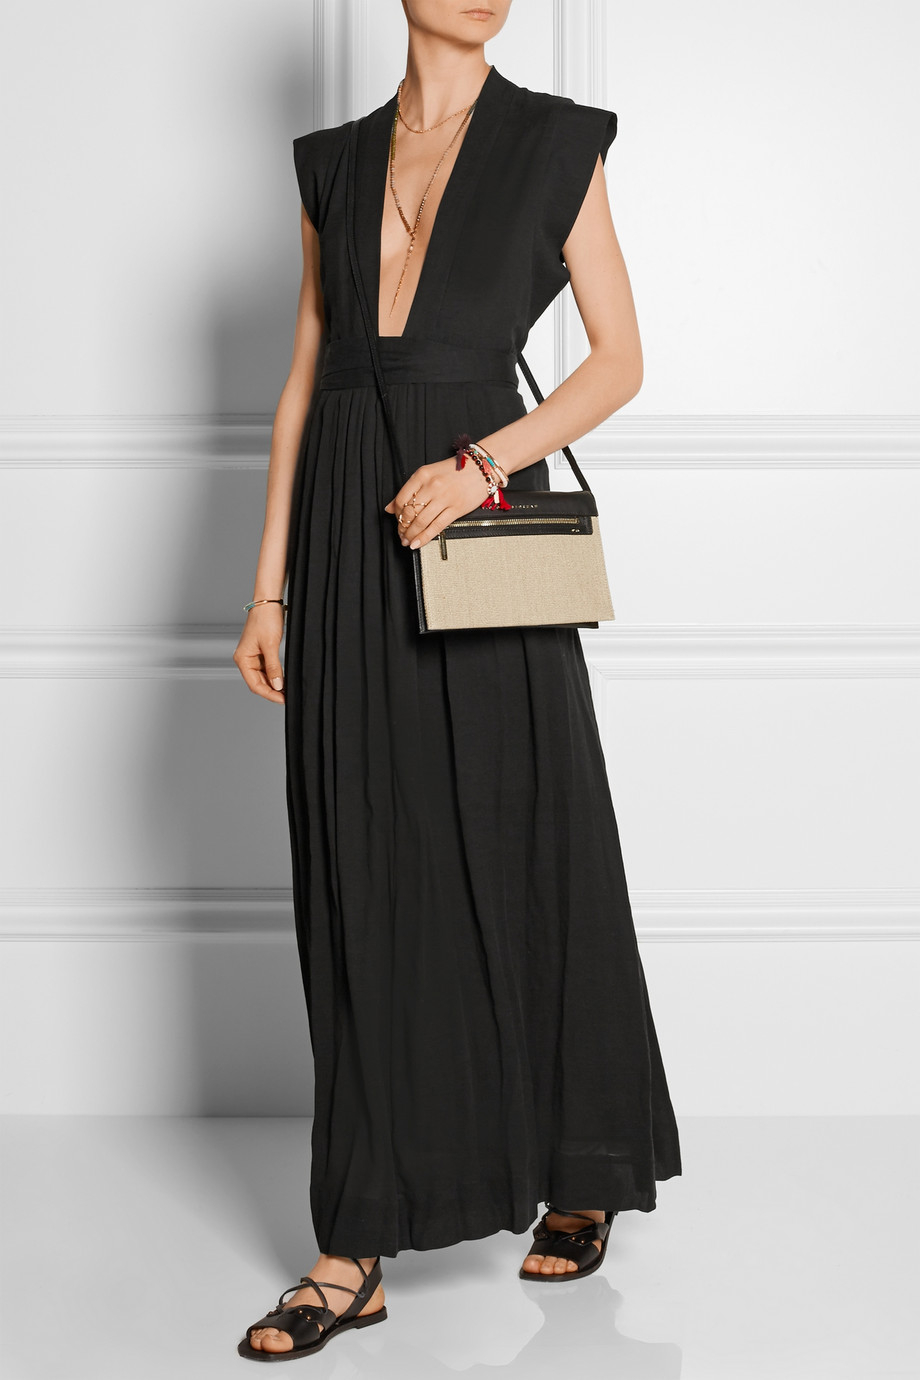 Isabel Marant Sachi Cotton-Blend Voile Dress in Black | Lyst